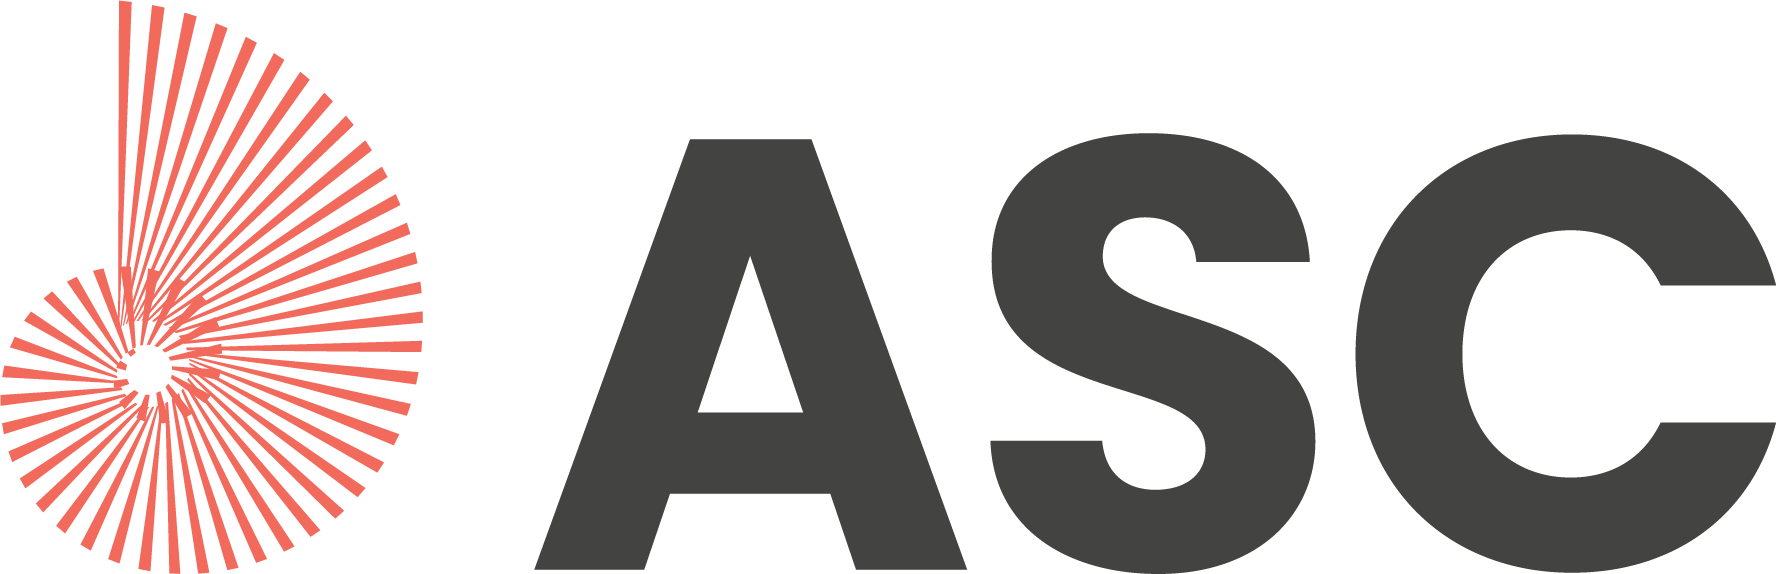 ASC Logo - Arch Street Communications